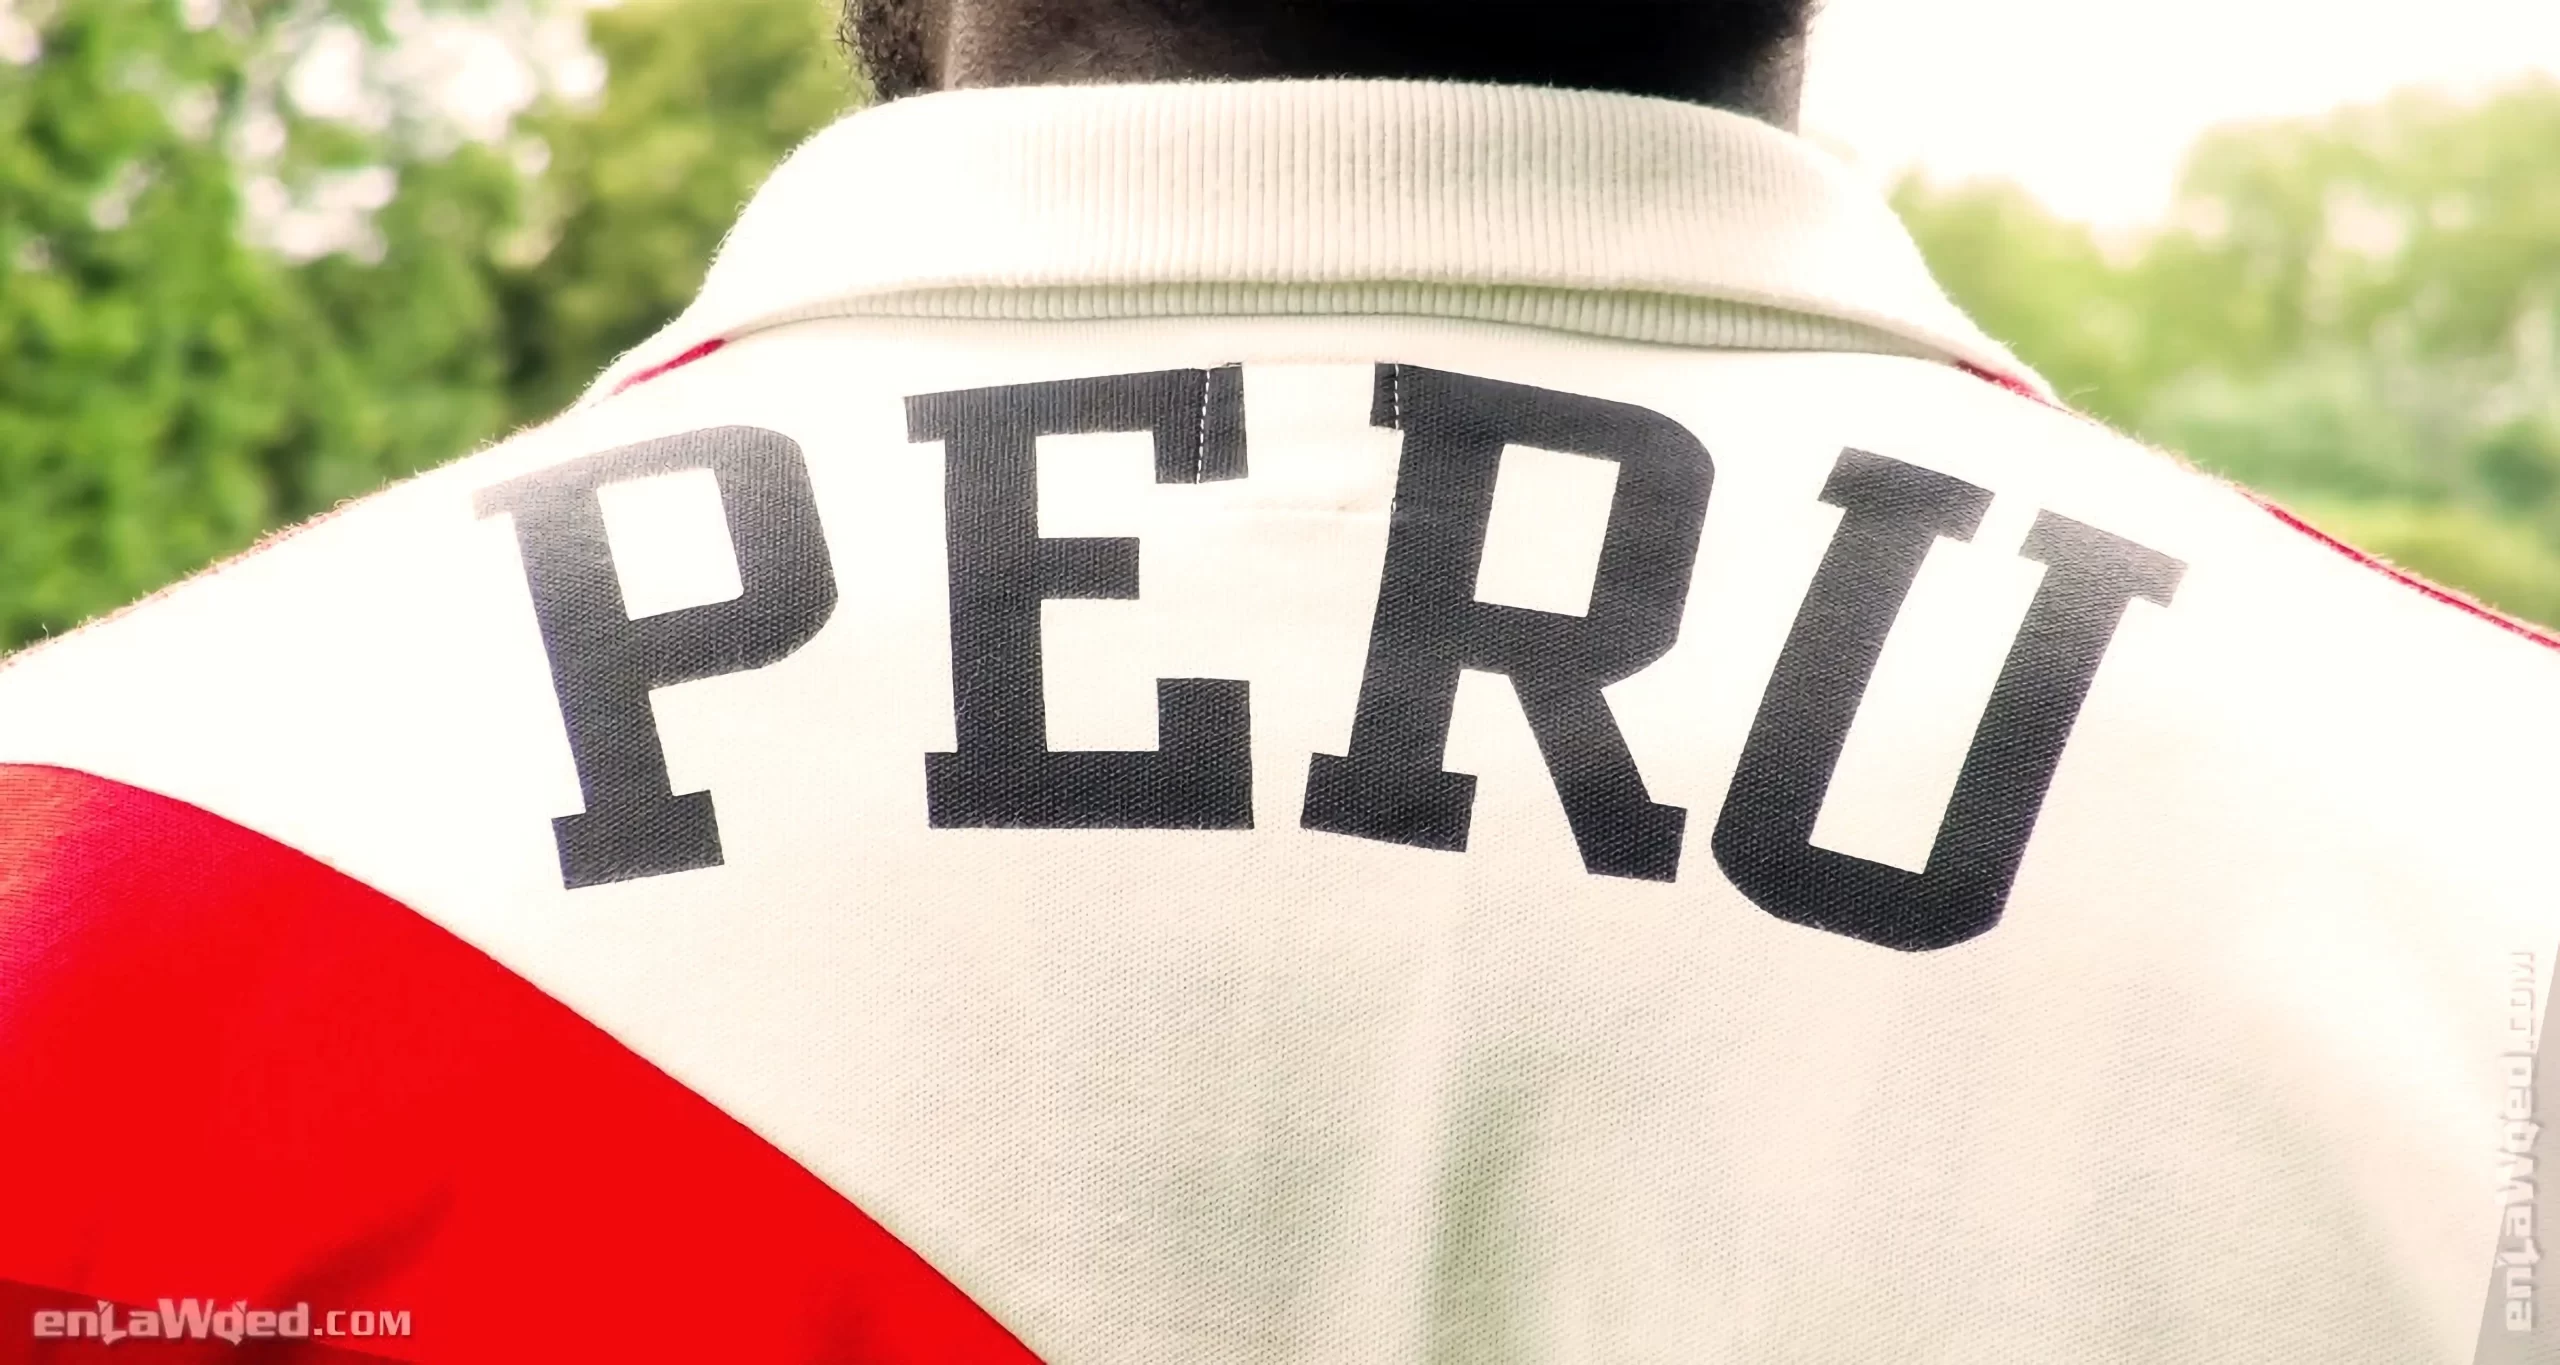 Men’s 2005 Peru ’78 Cubillas TT by Adidas Originals: Definitely (EnLawded.com file #lmc4nlj6lxjtvh5xf4)